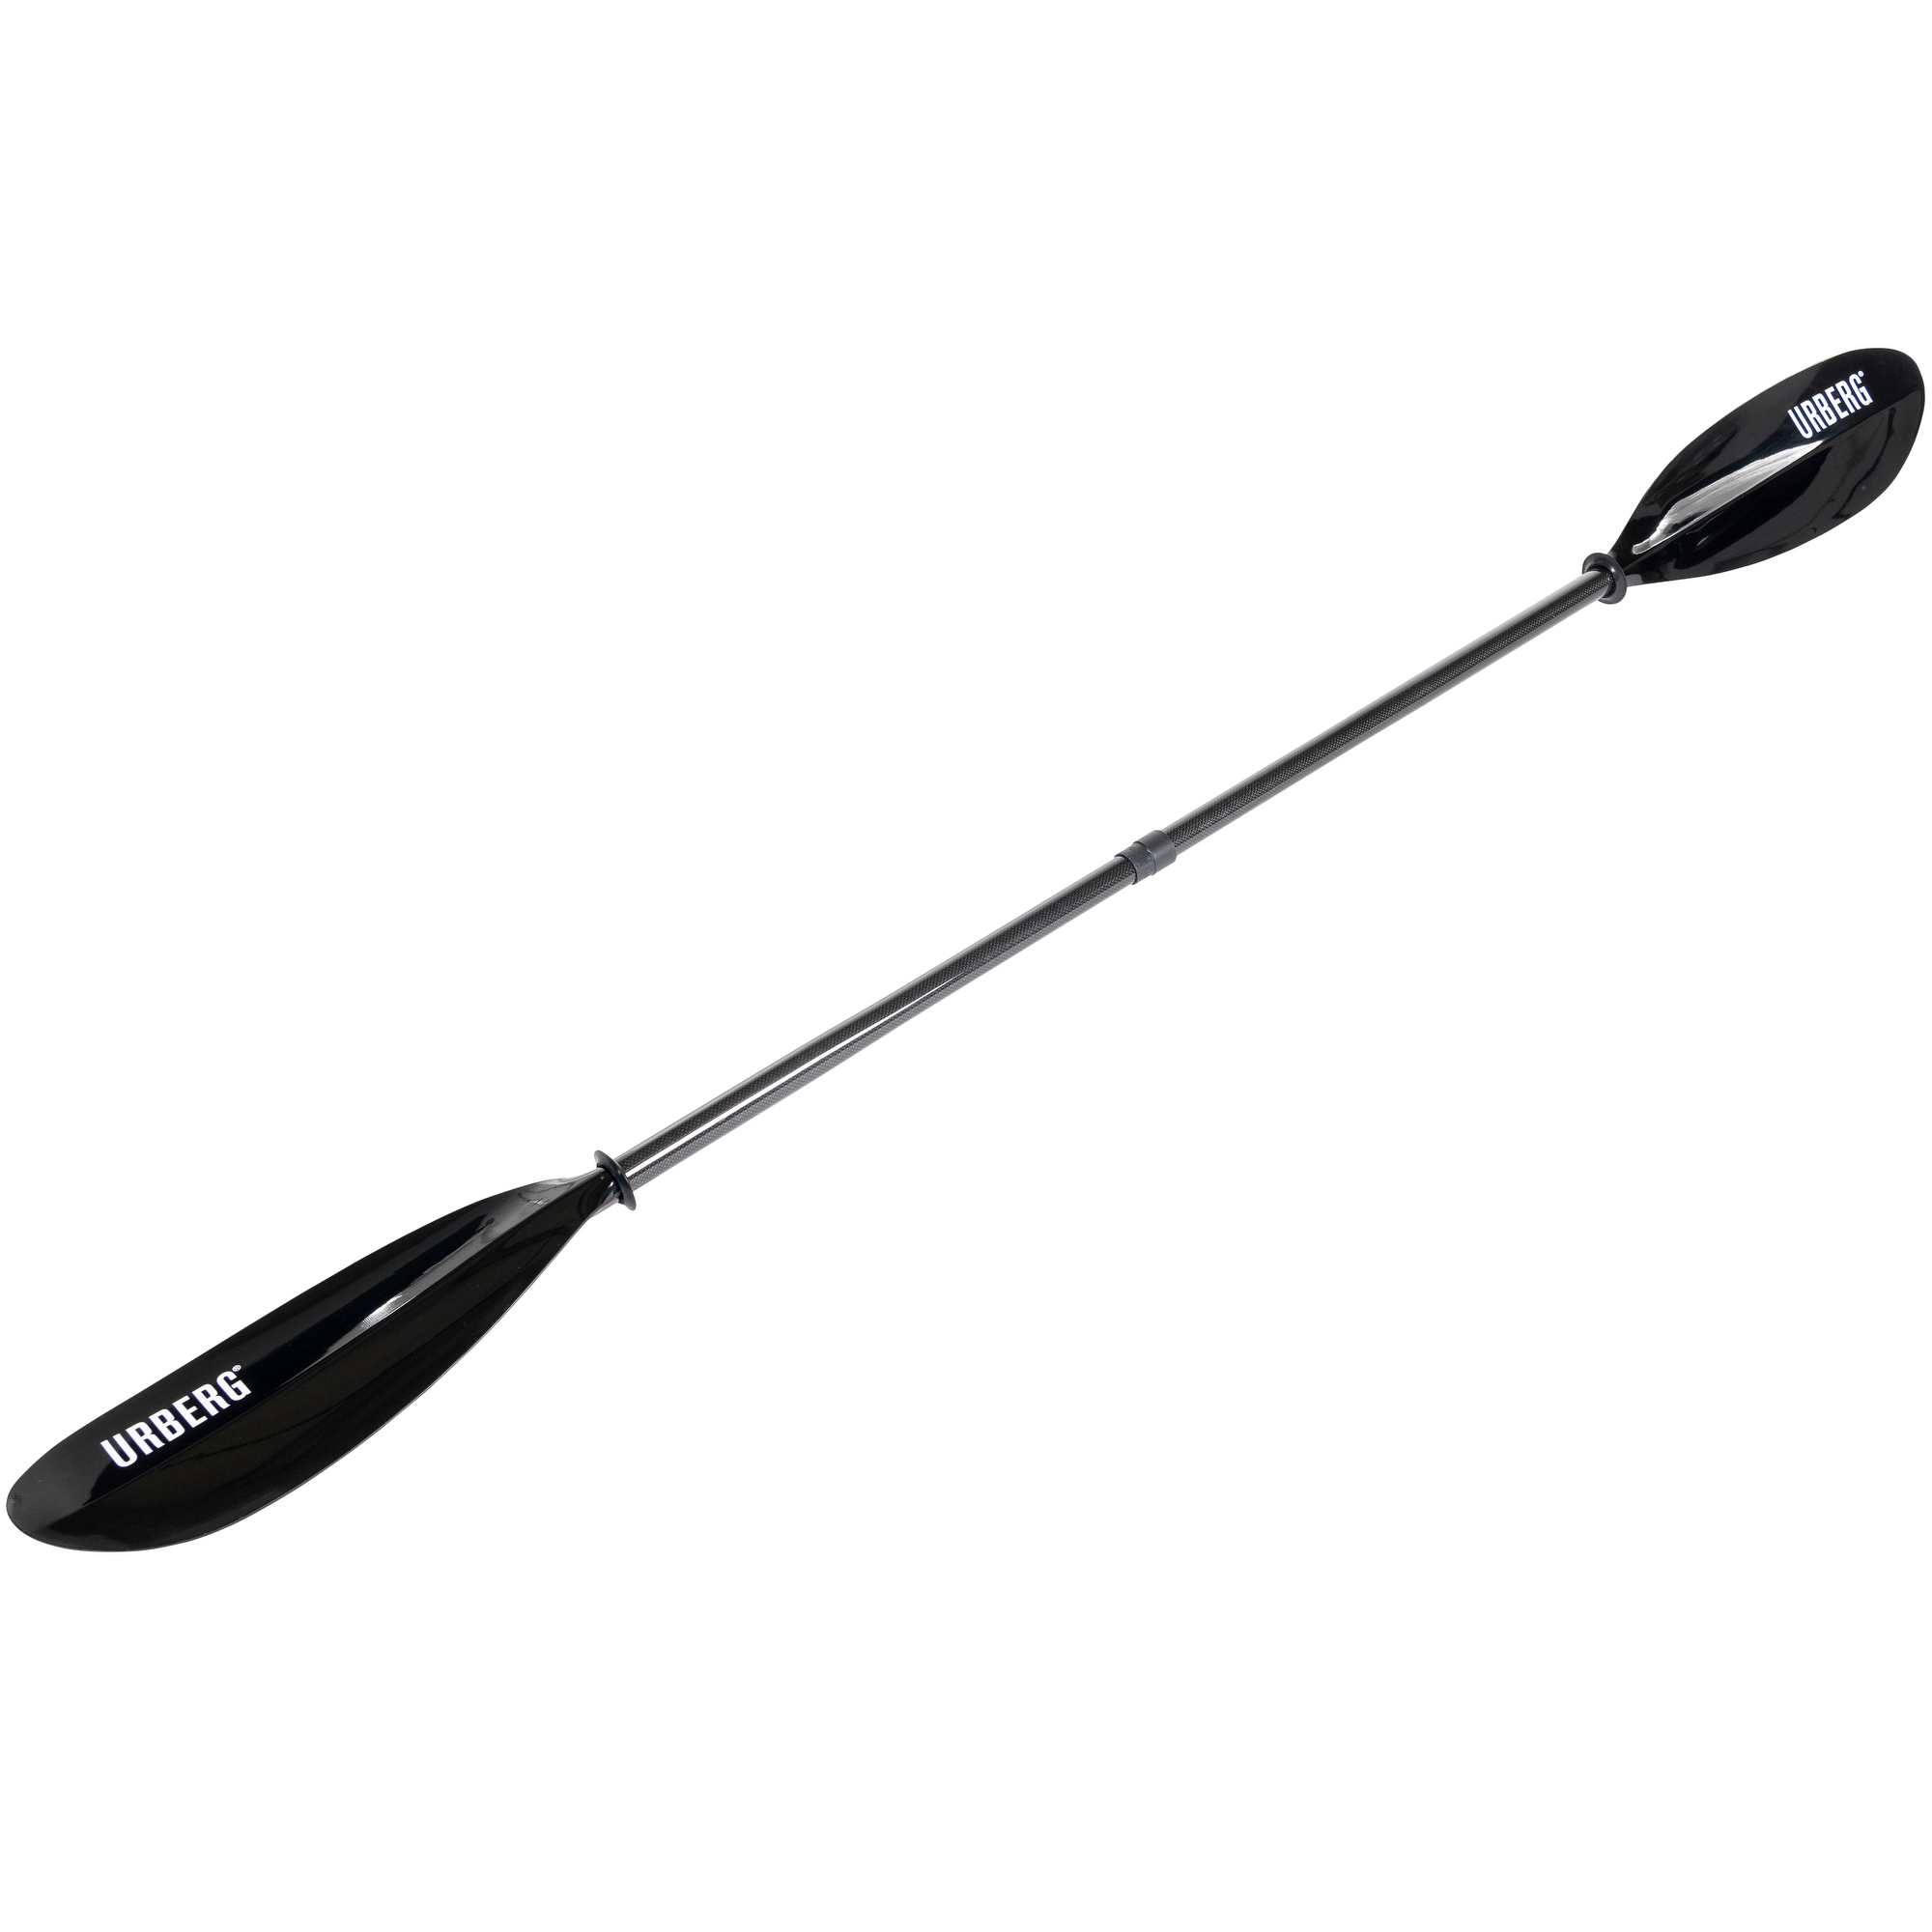 Urberg Carbon Pole Paddle Black